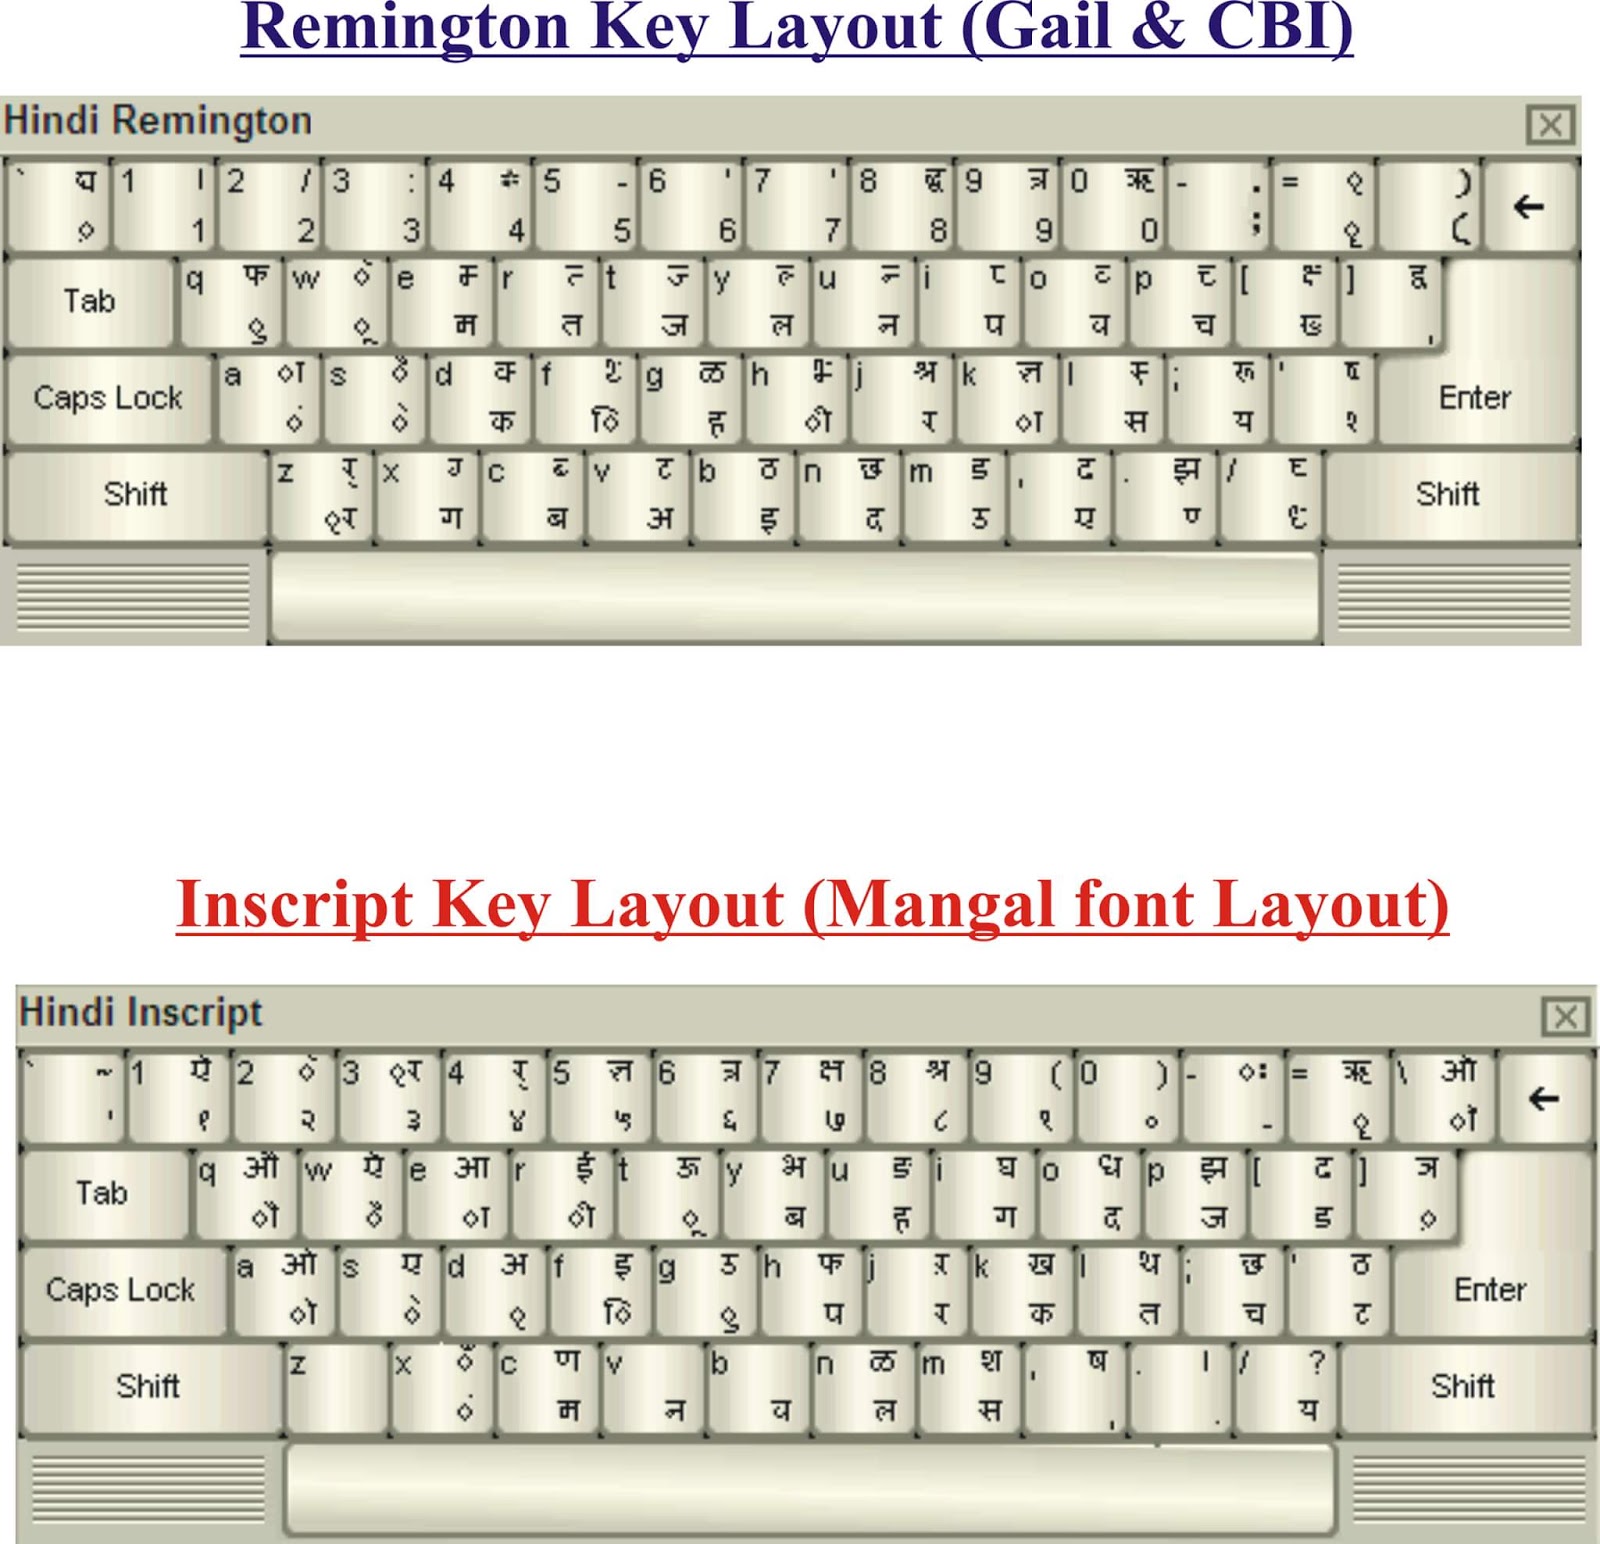 Mangal Marathi Font Keyboard